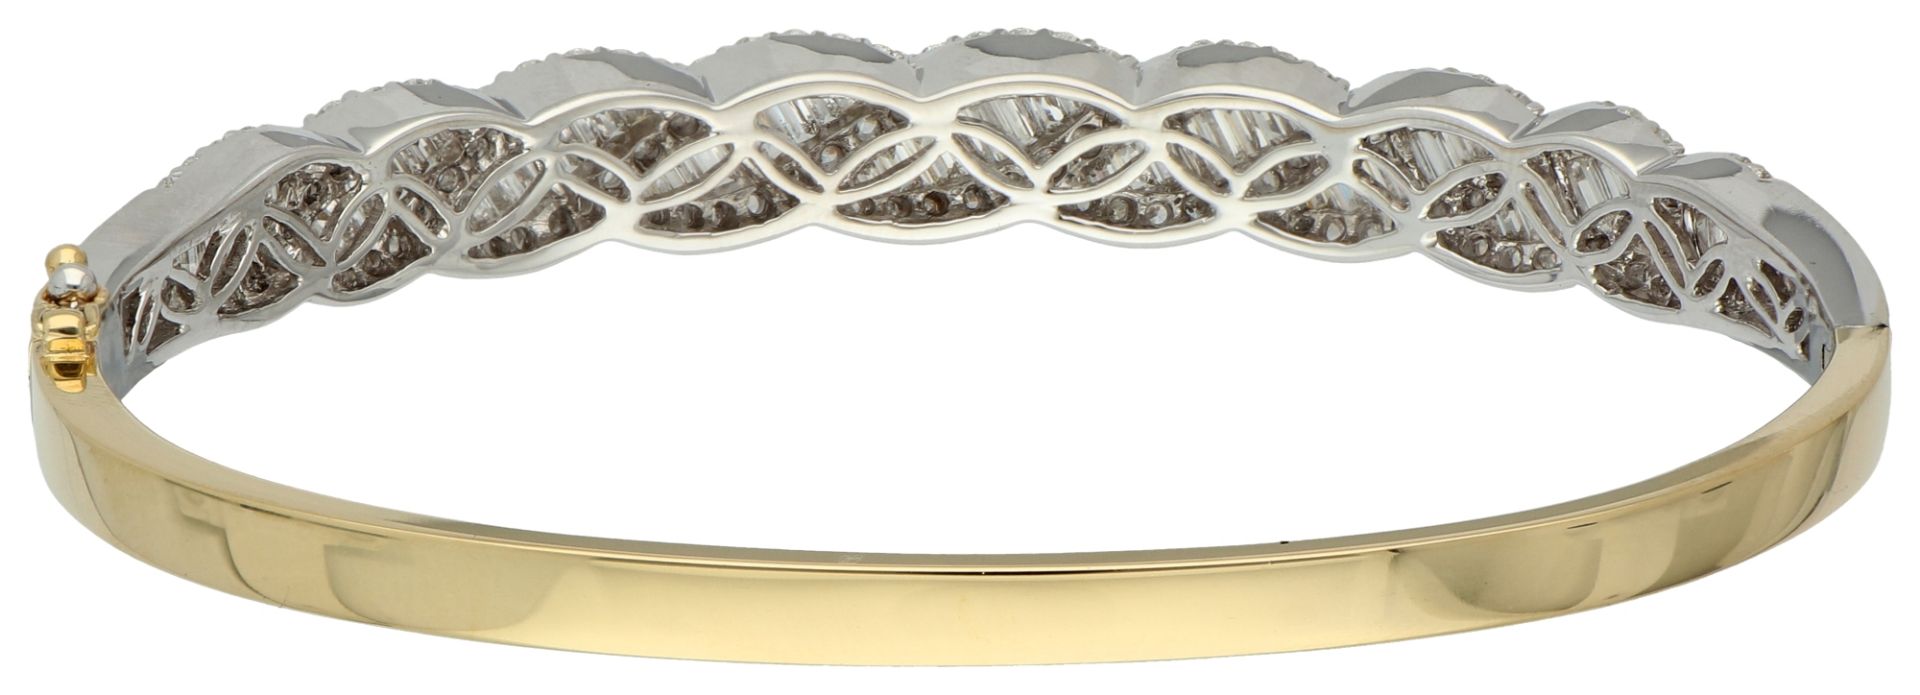 18K Bicolour gold bangle bracelet set with approx. 2.80 ct. diamond. - Image 3 of 4